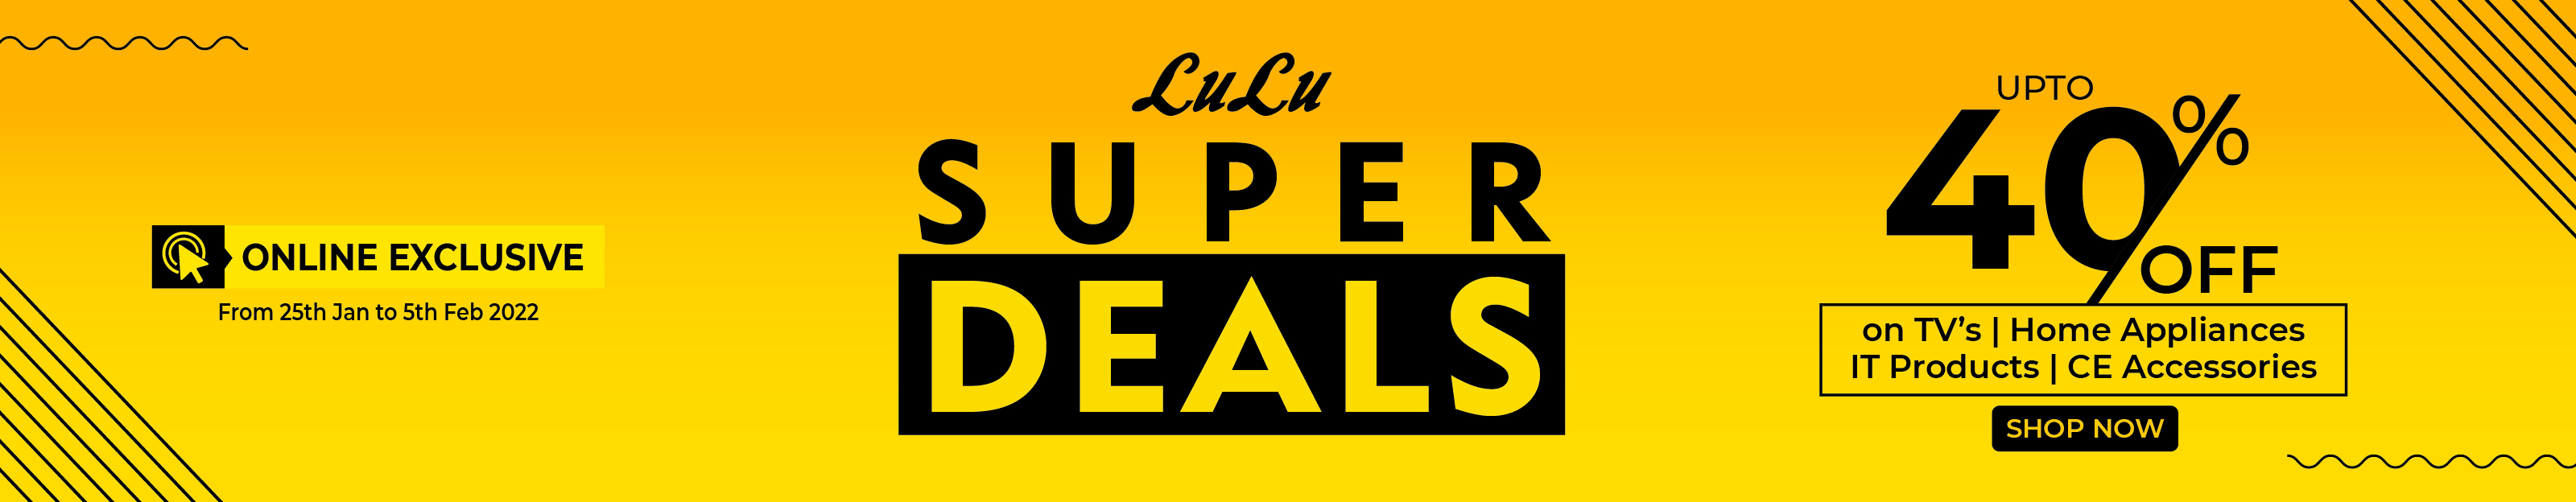 super deals@2x-100.jpg